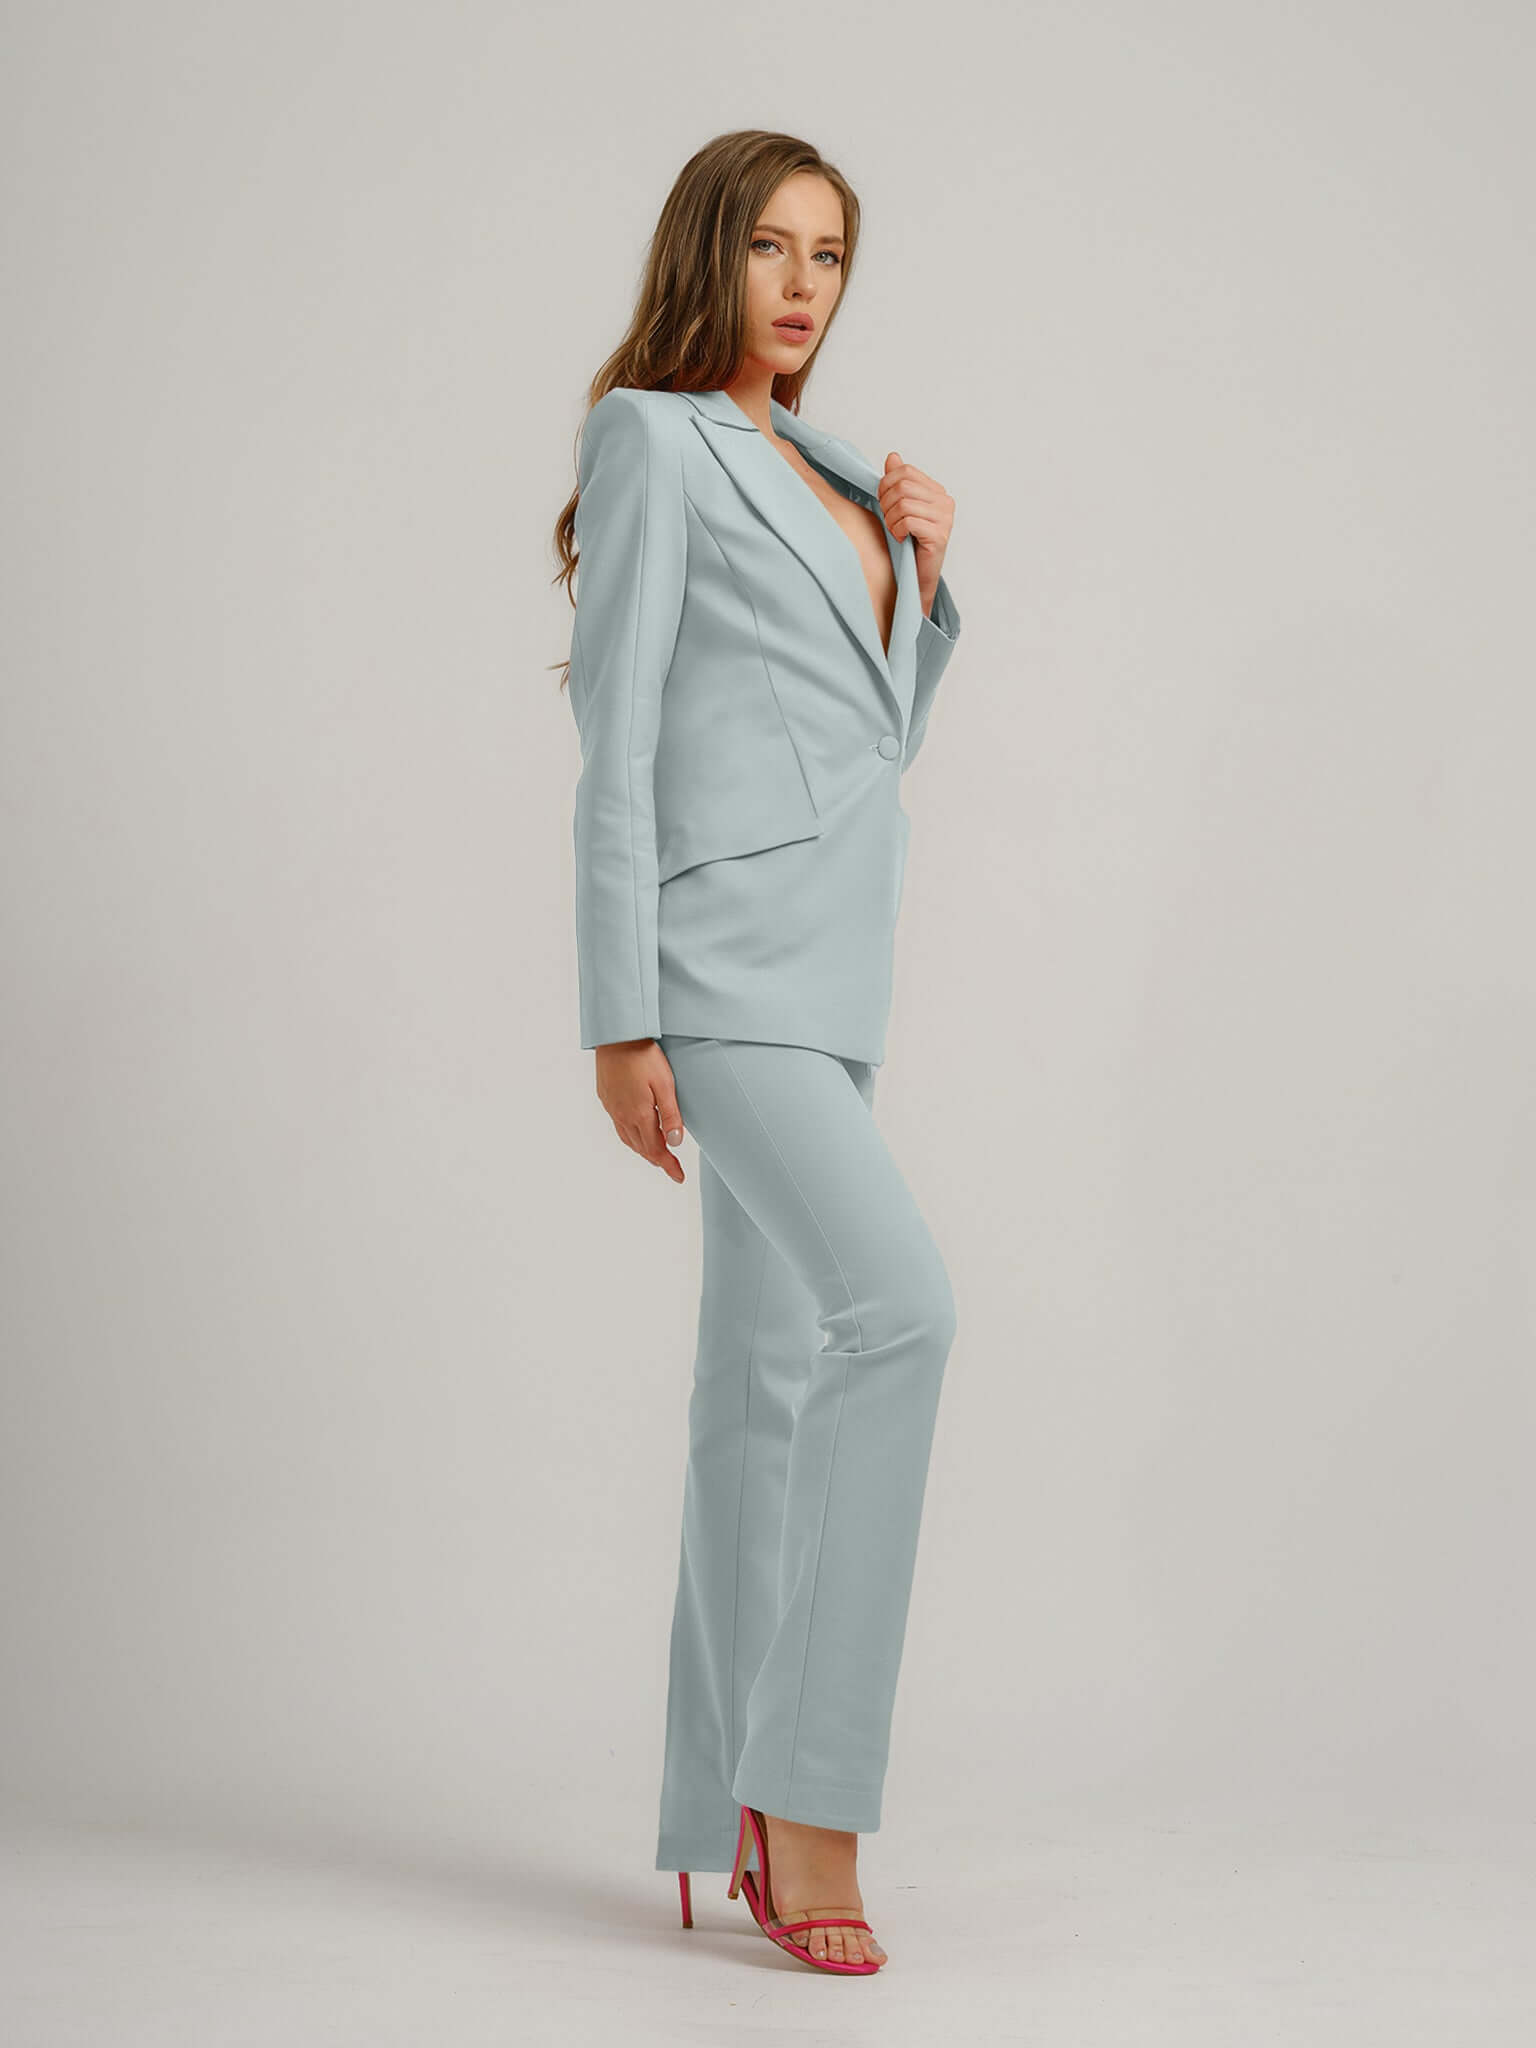 Fantasy Tailored Blazer - Light Blue by Tia Dorraine Women's Luxury Fashion Designer Clothing Brand